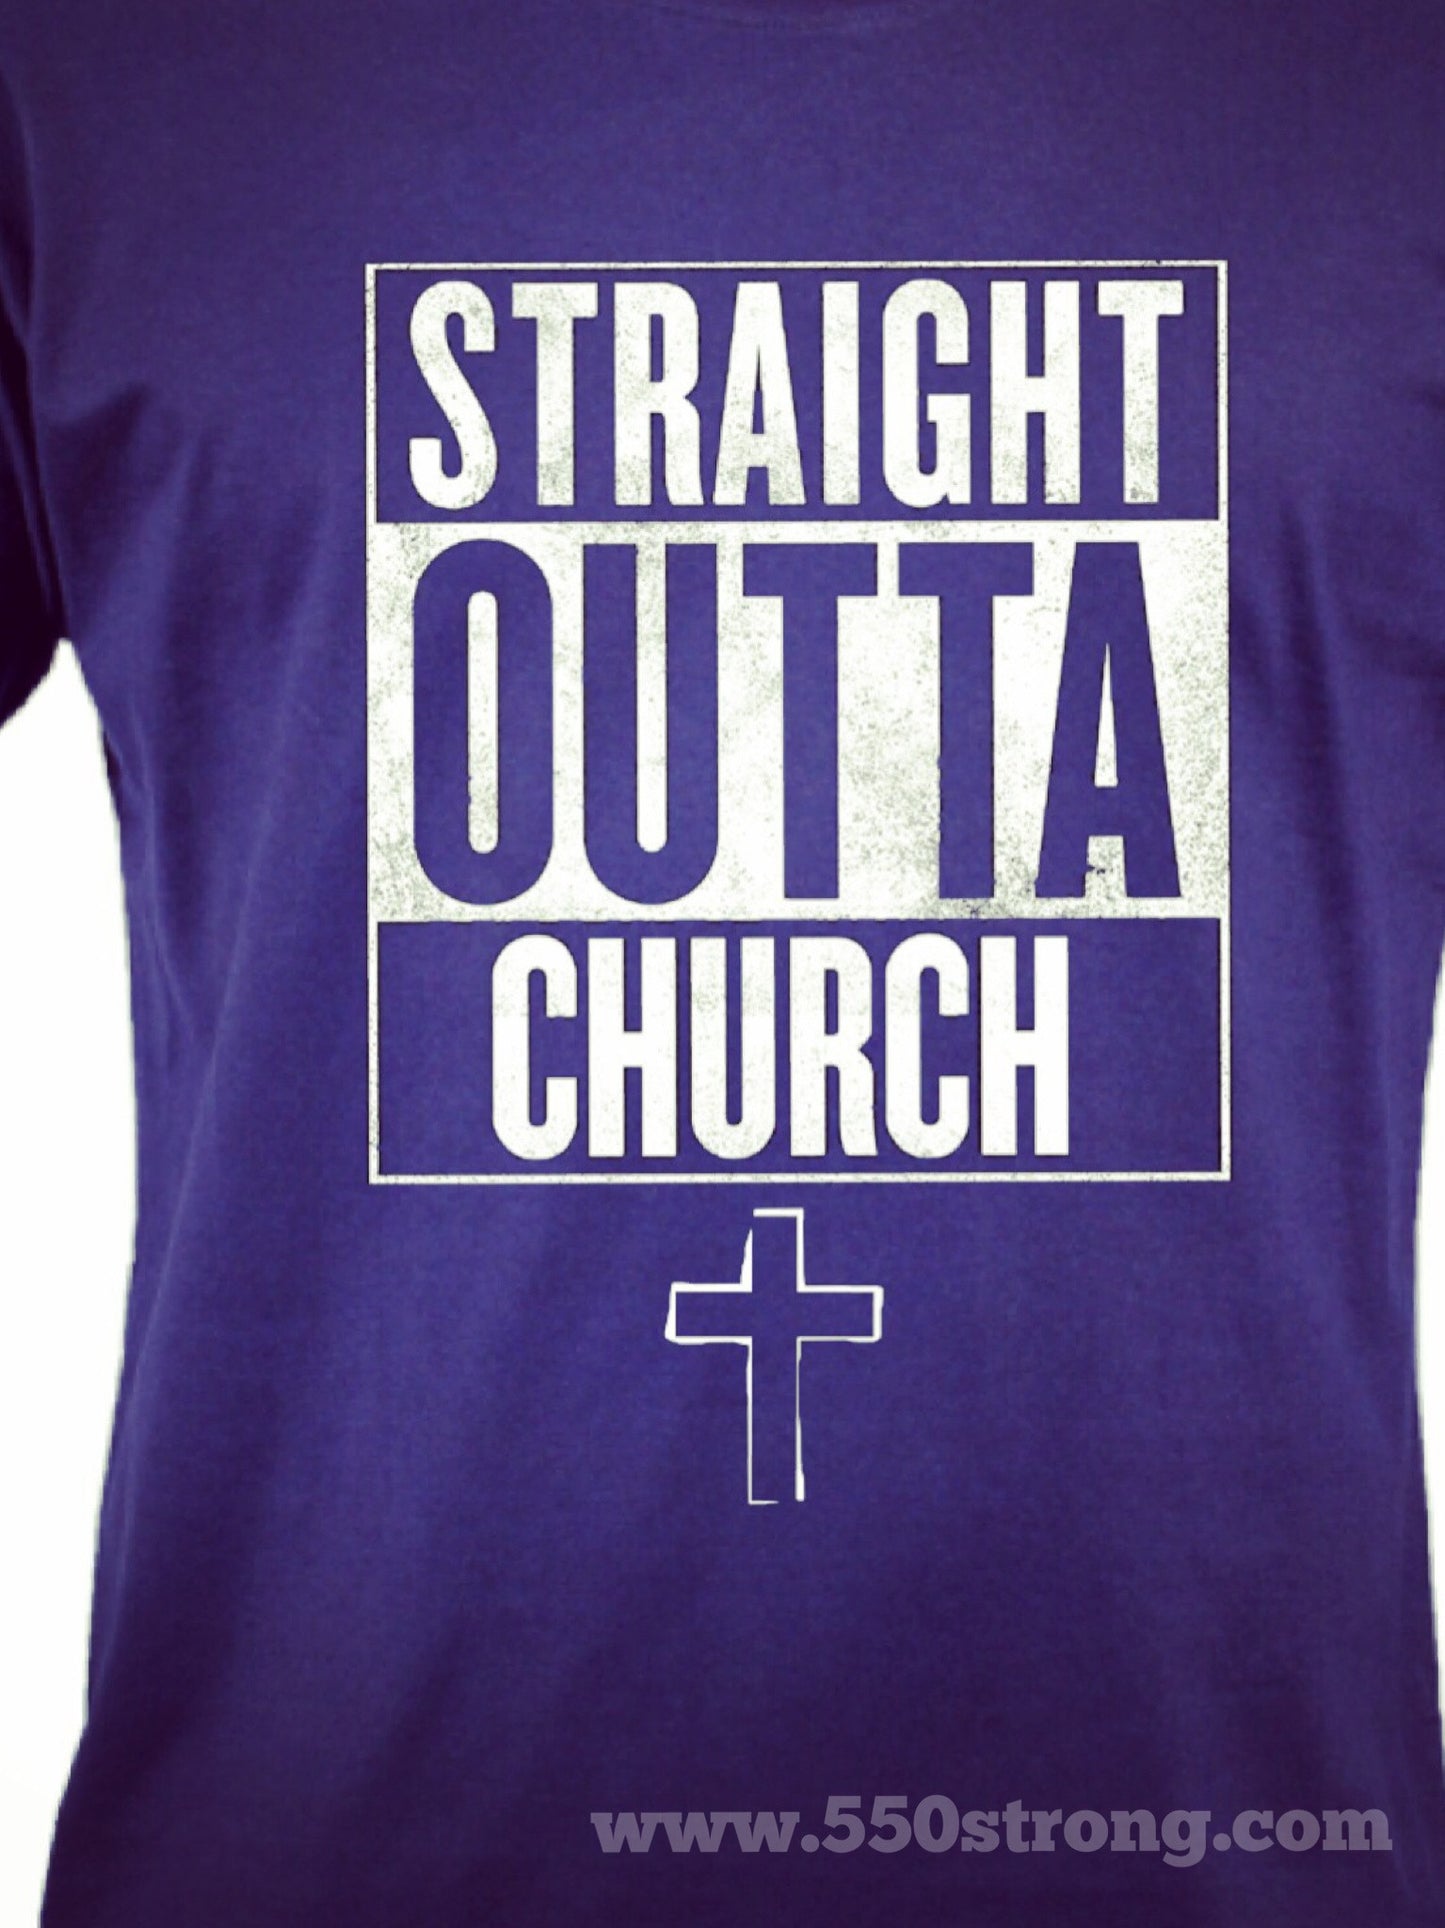 Straight Outta Church T-Shirt - 550strong